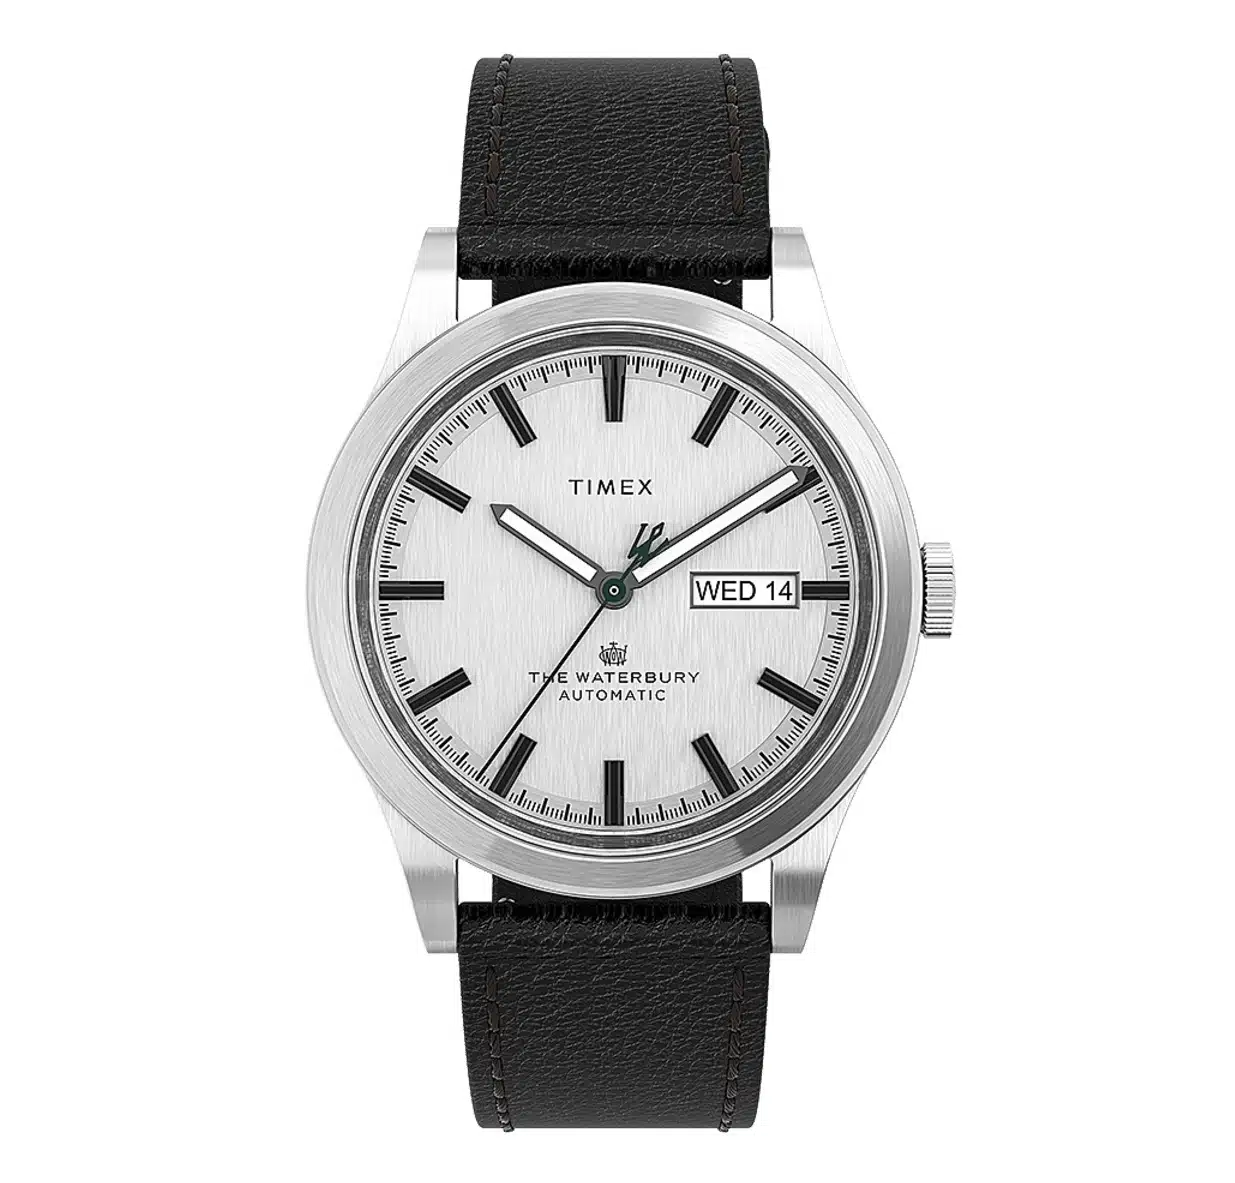 Recensione dell'orologio Timex - Waterbury Automatic